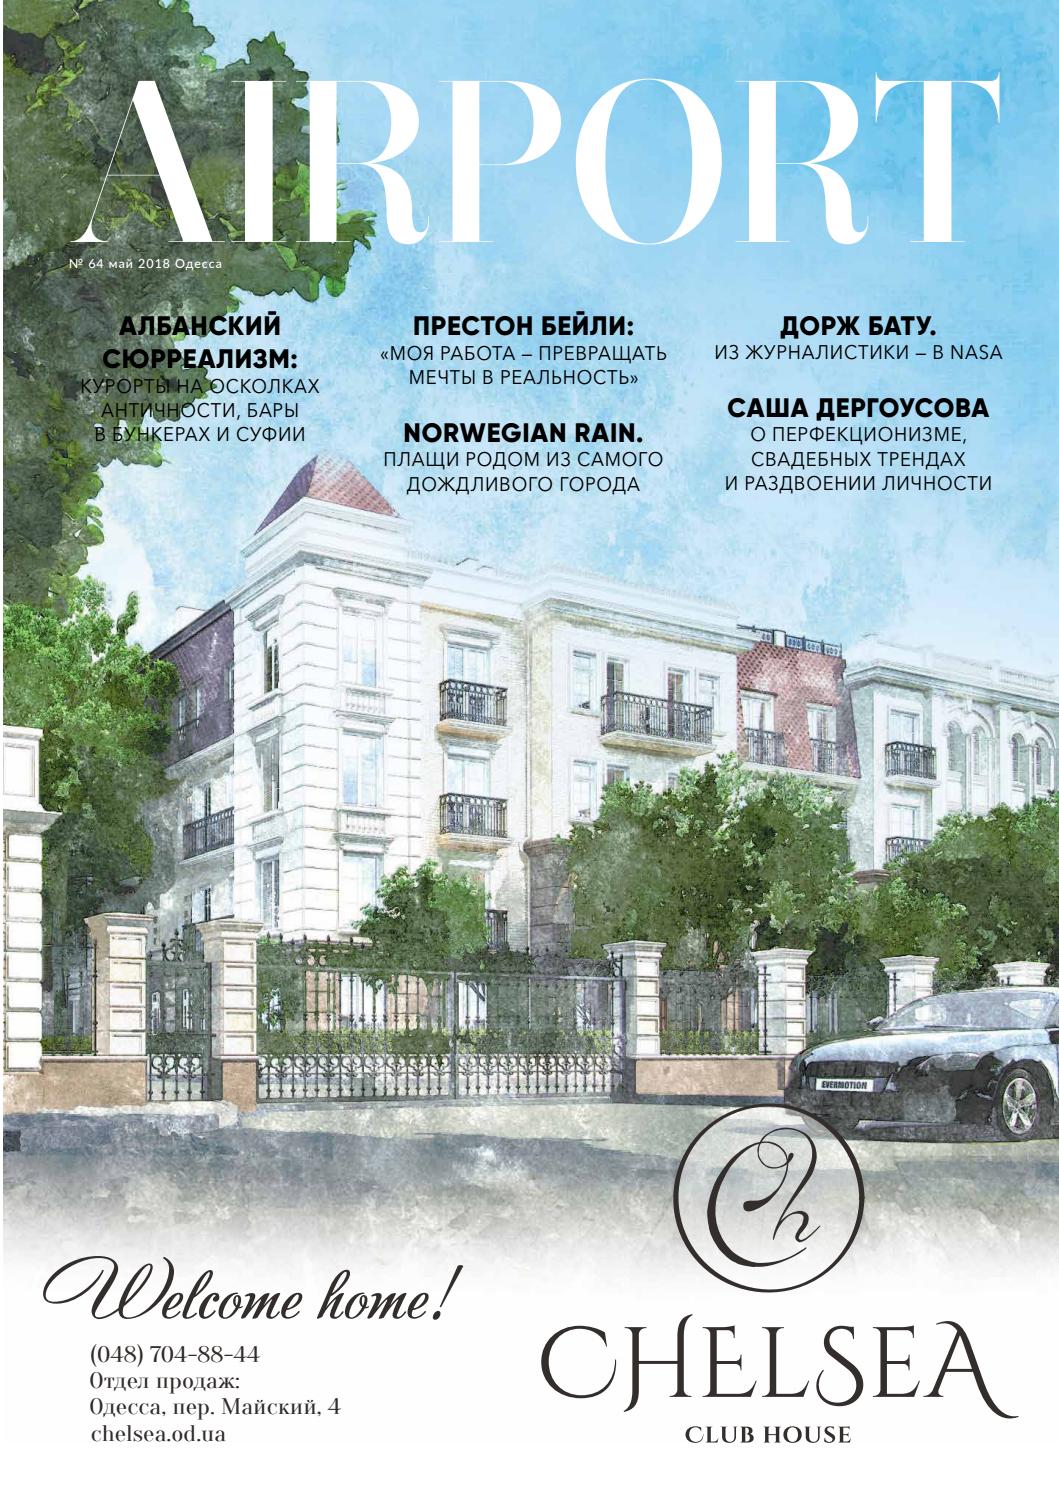 Salon De Jardi Frais May 18 by Airport Magazine Odessa issuu